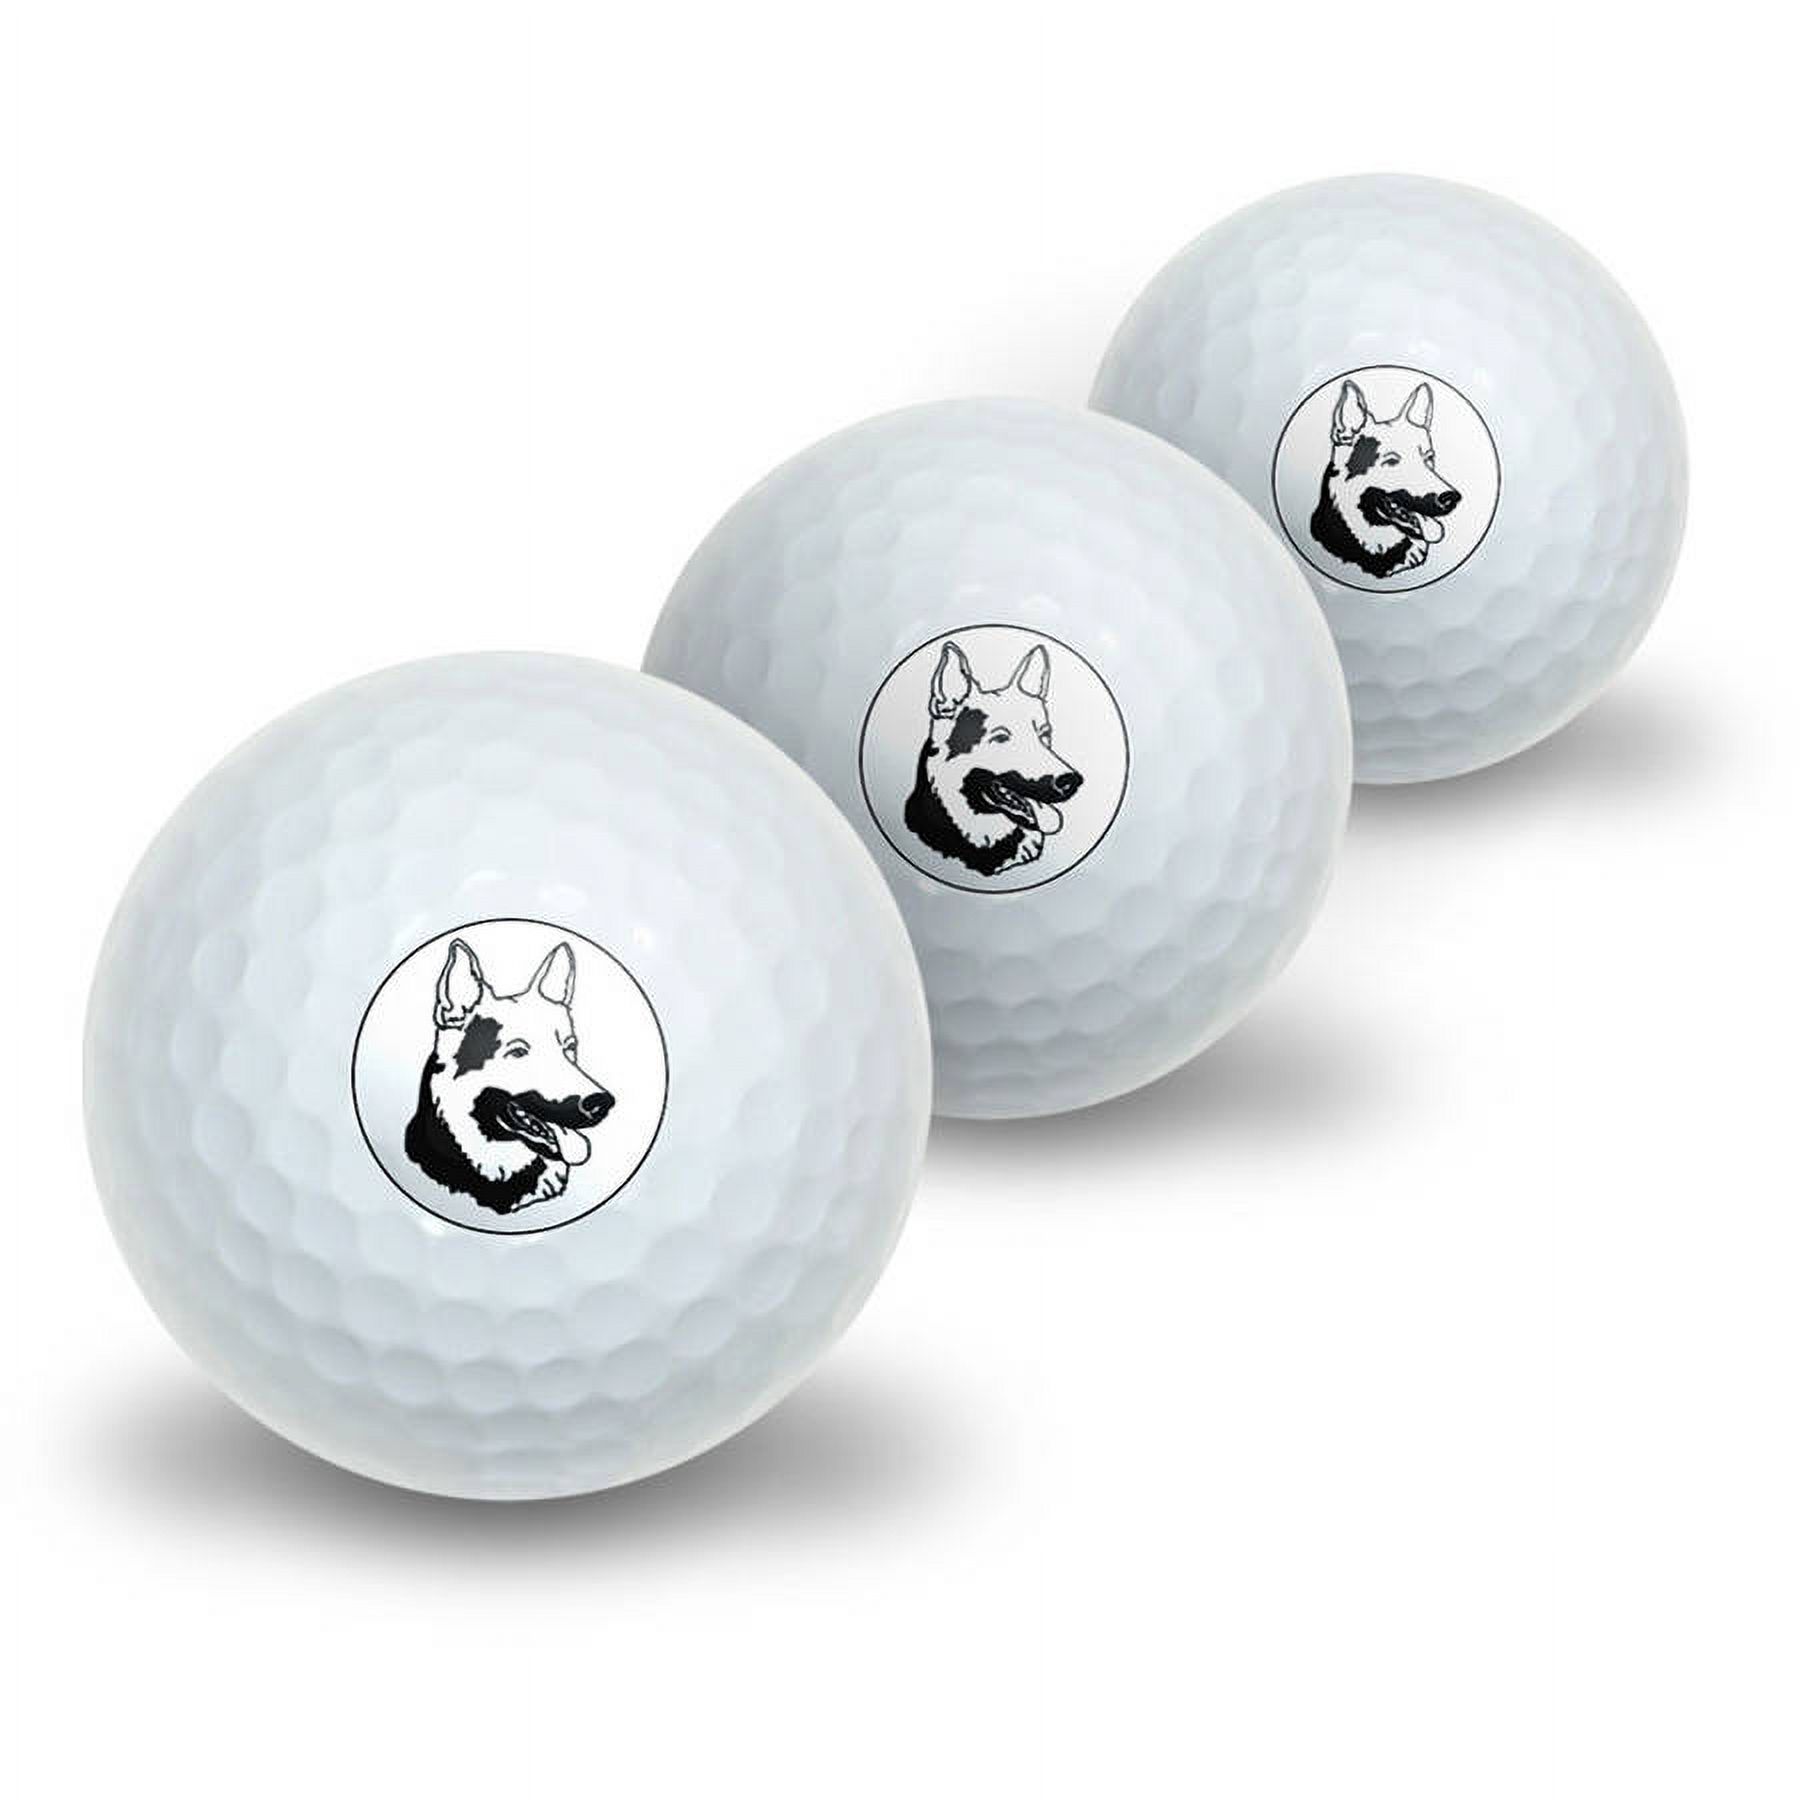 German Shepherd Dog Novelty Golf Balls, 3pk - image 1 of 4